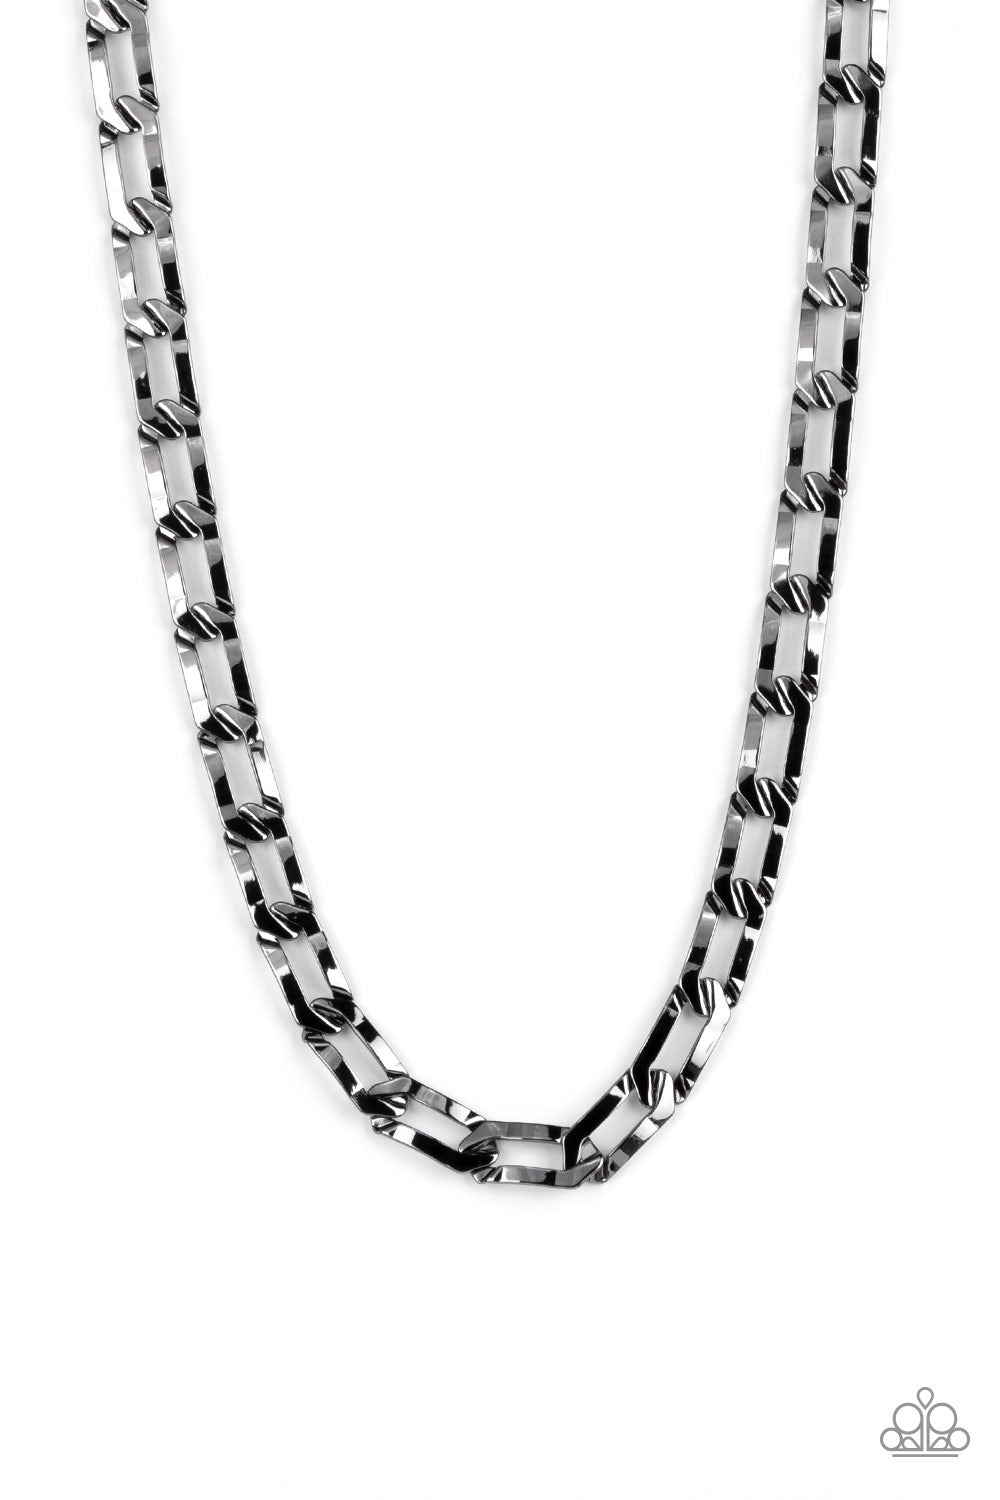 Full-Court Press - Black Necklace - Paparazzi - Dare2bdazzlin N Jewelry